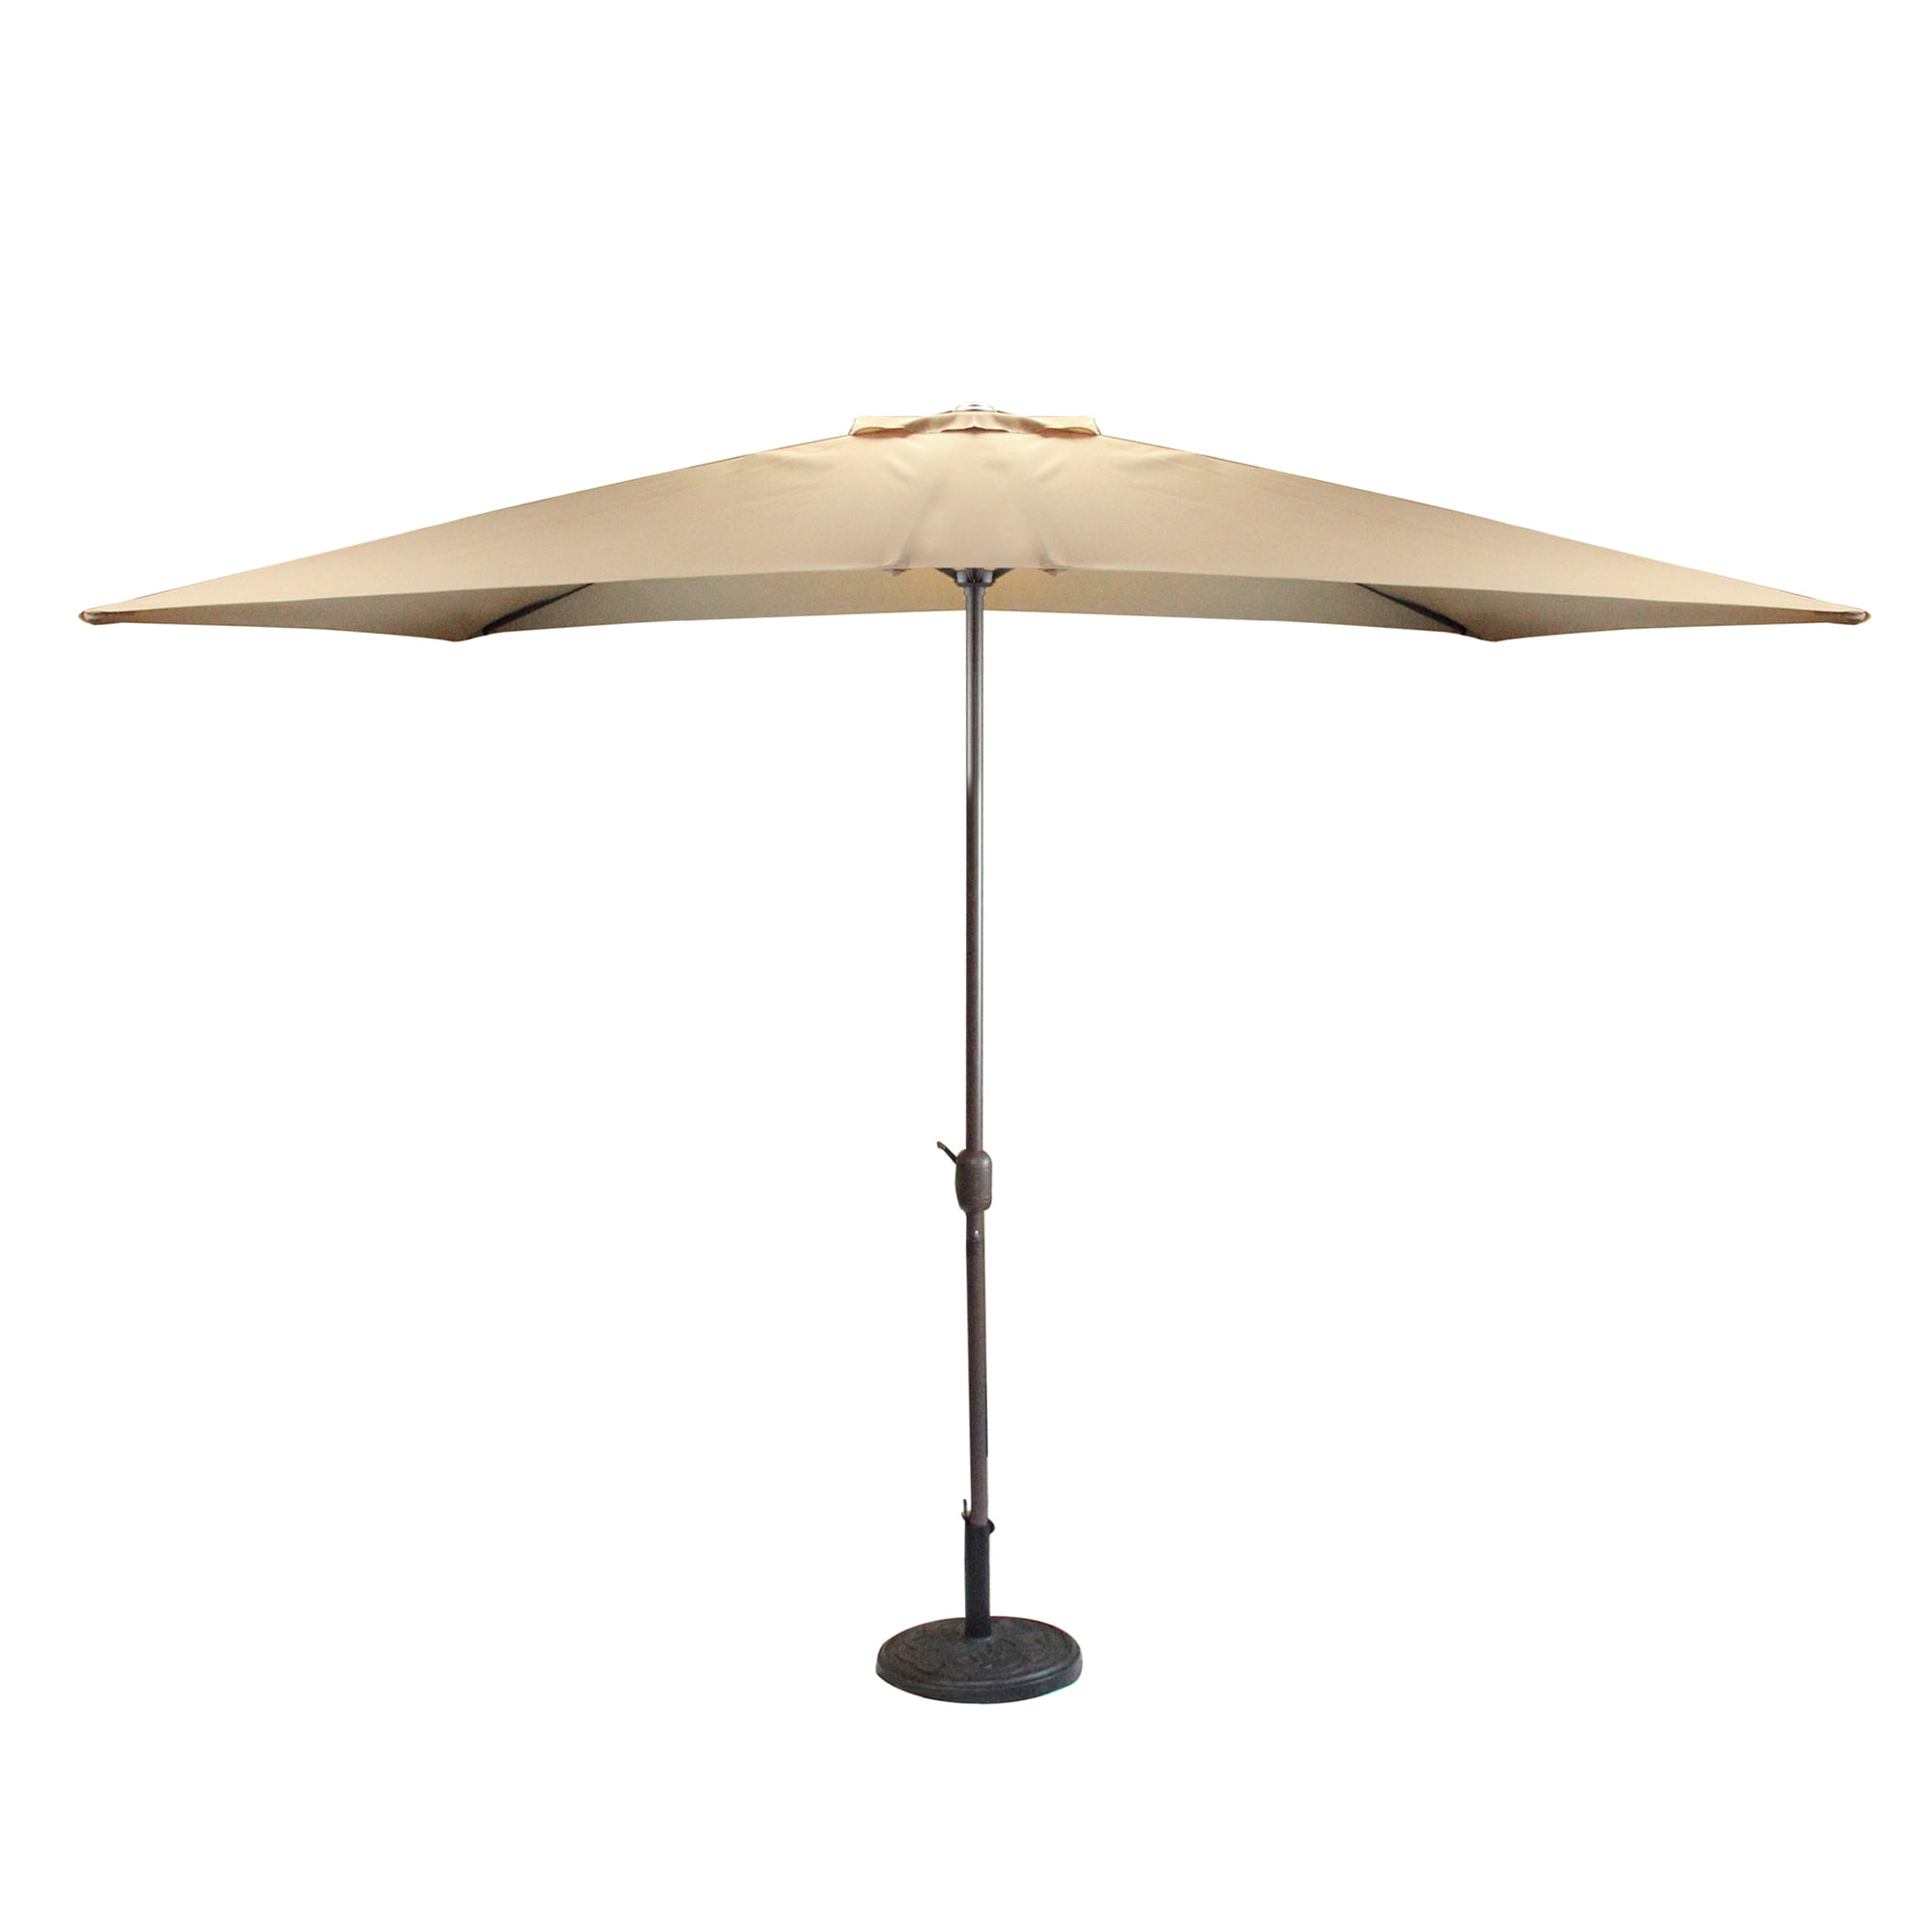 Postcode Eed enthousiasme Northlight 8.5' Outdoor Patio Market Umbrella with Hand Crank - Brown -  Walmart.com